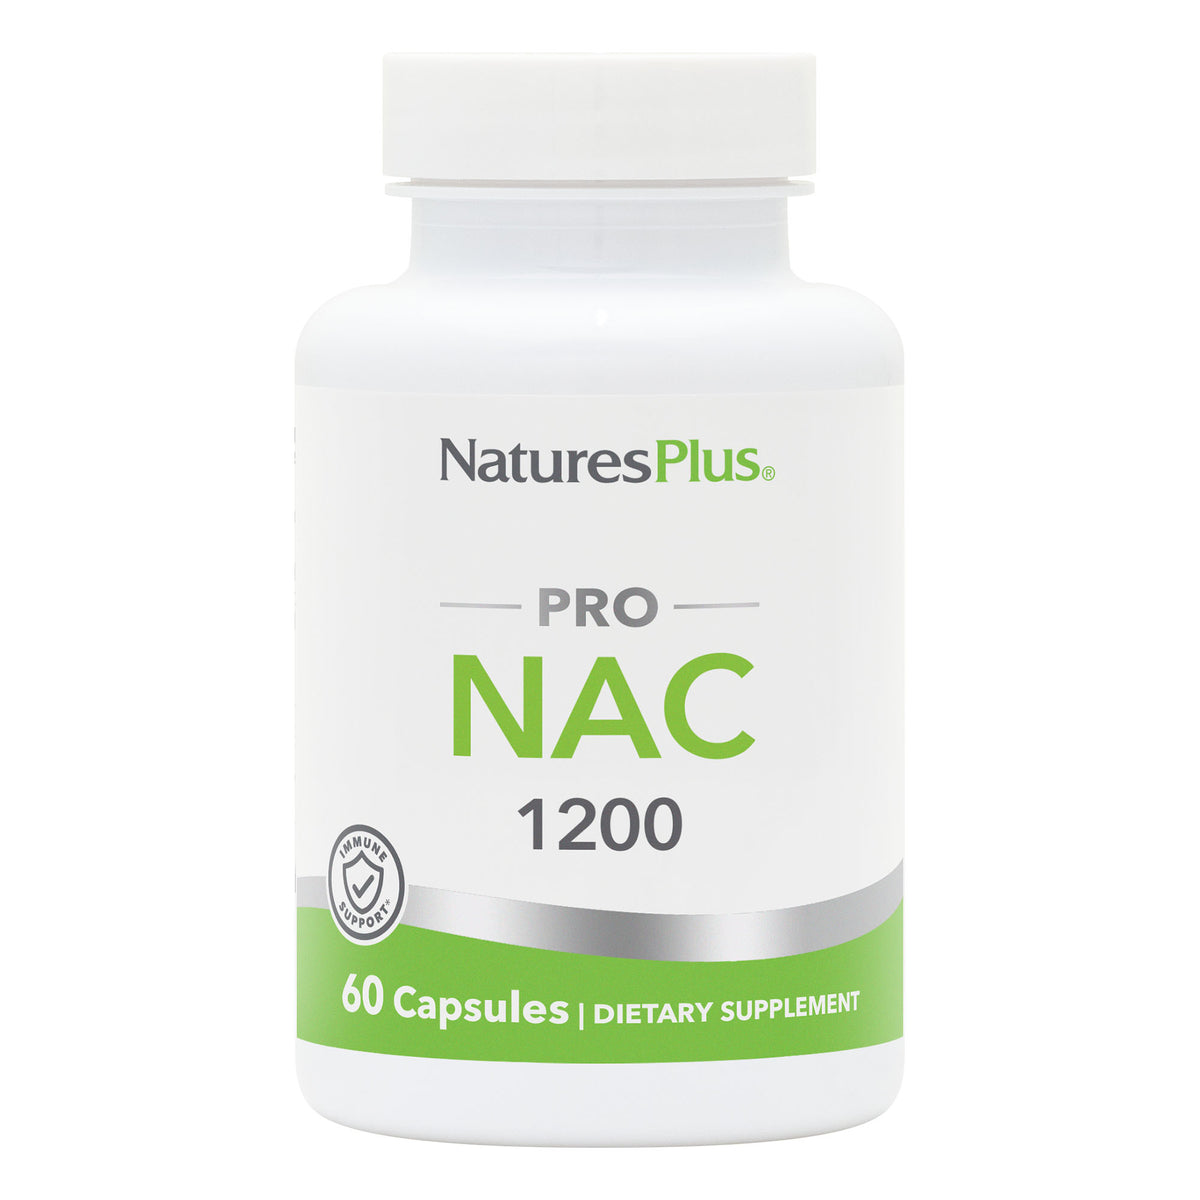 product image of NaturesPlus PRO NAC 1200 Capsules containing 60 Count